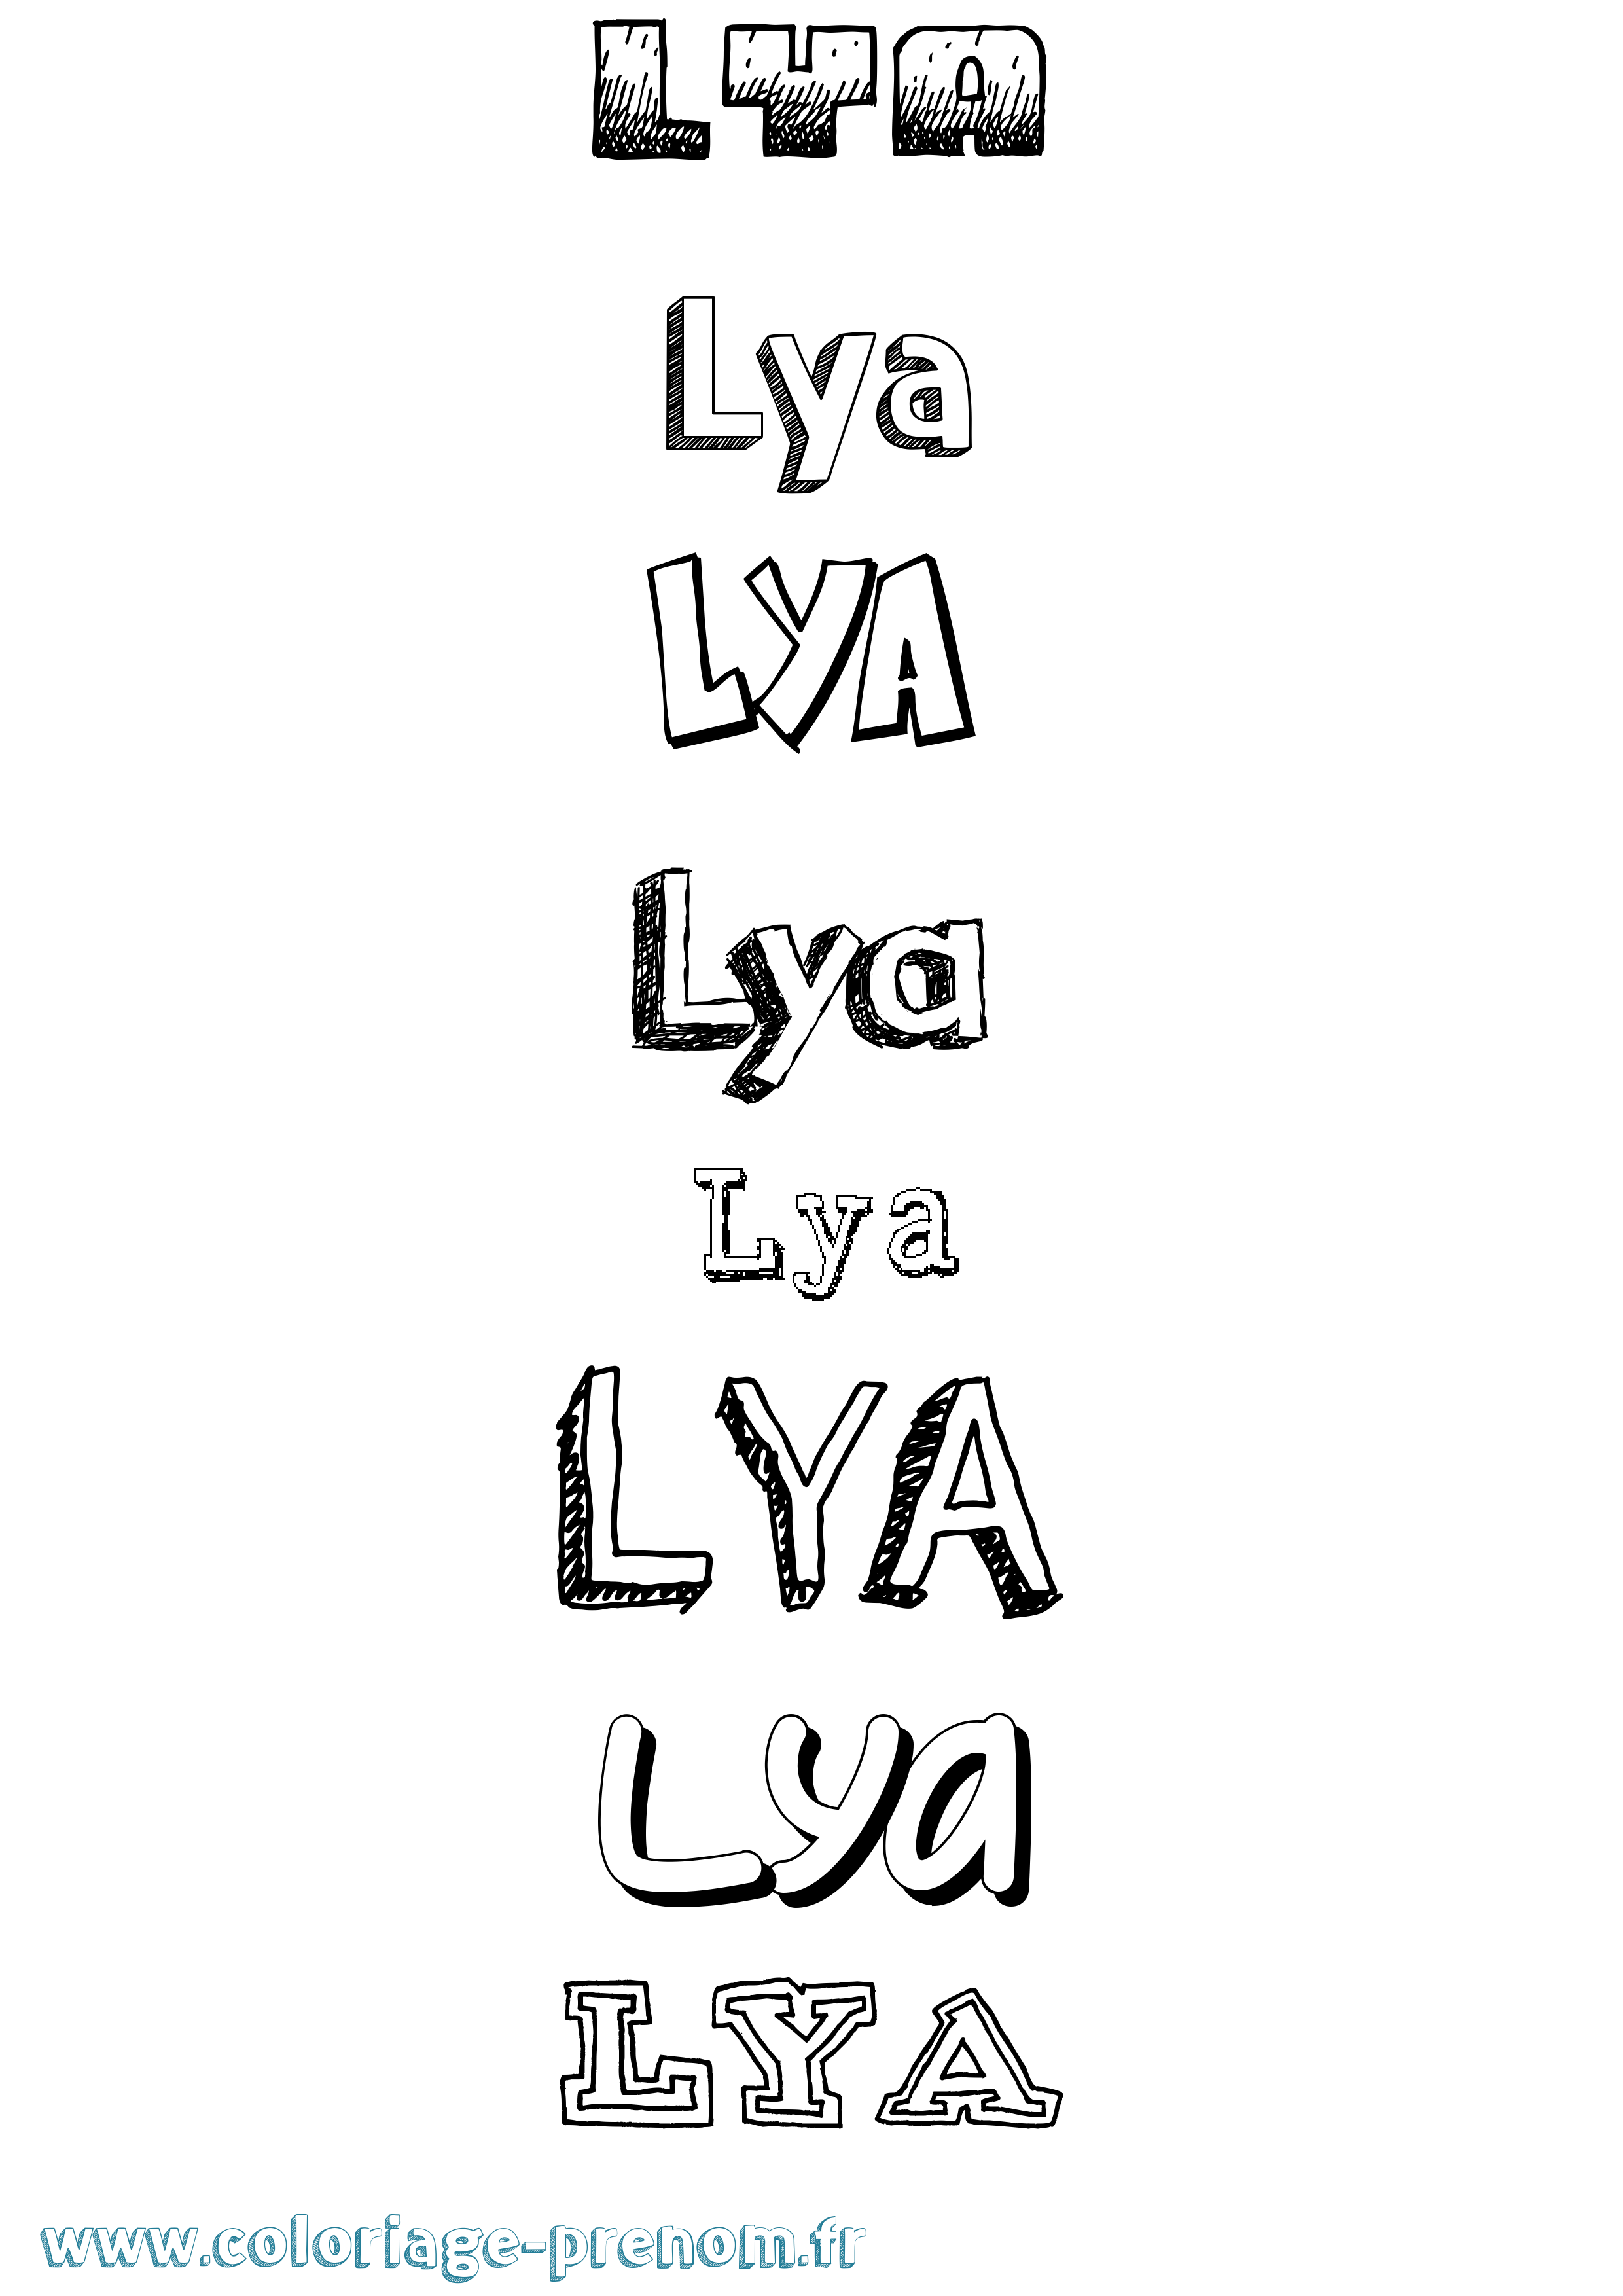 Coloriage prénom Lya Dessiné